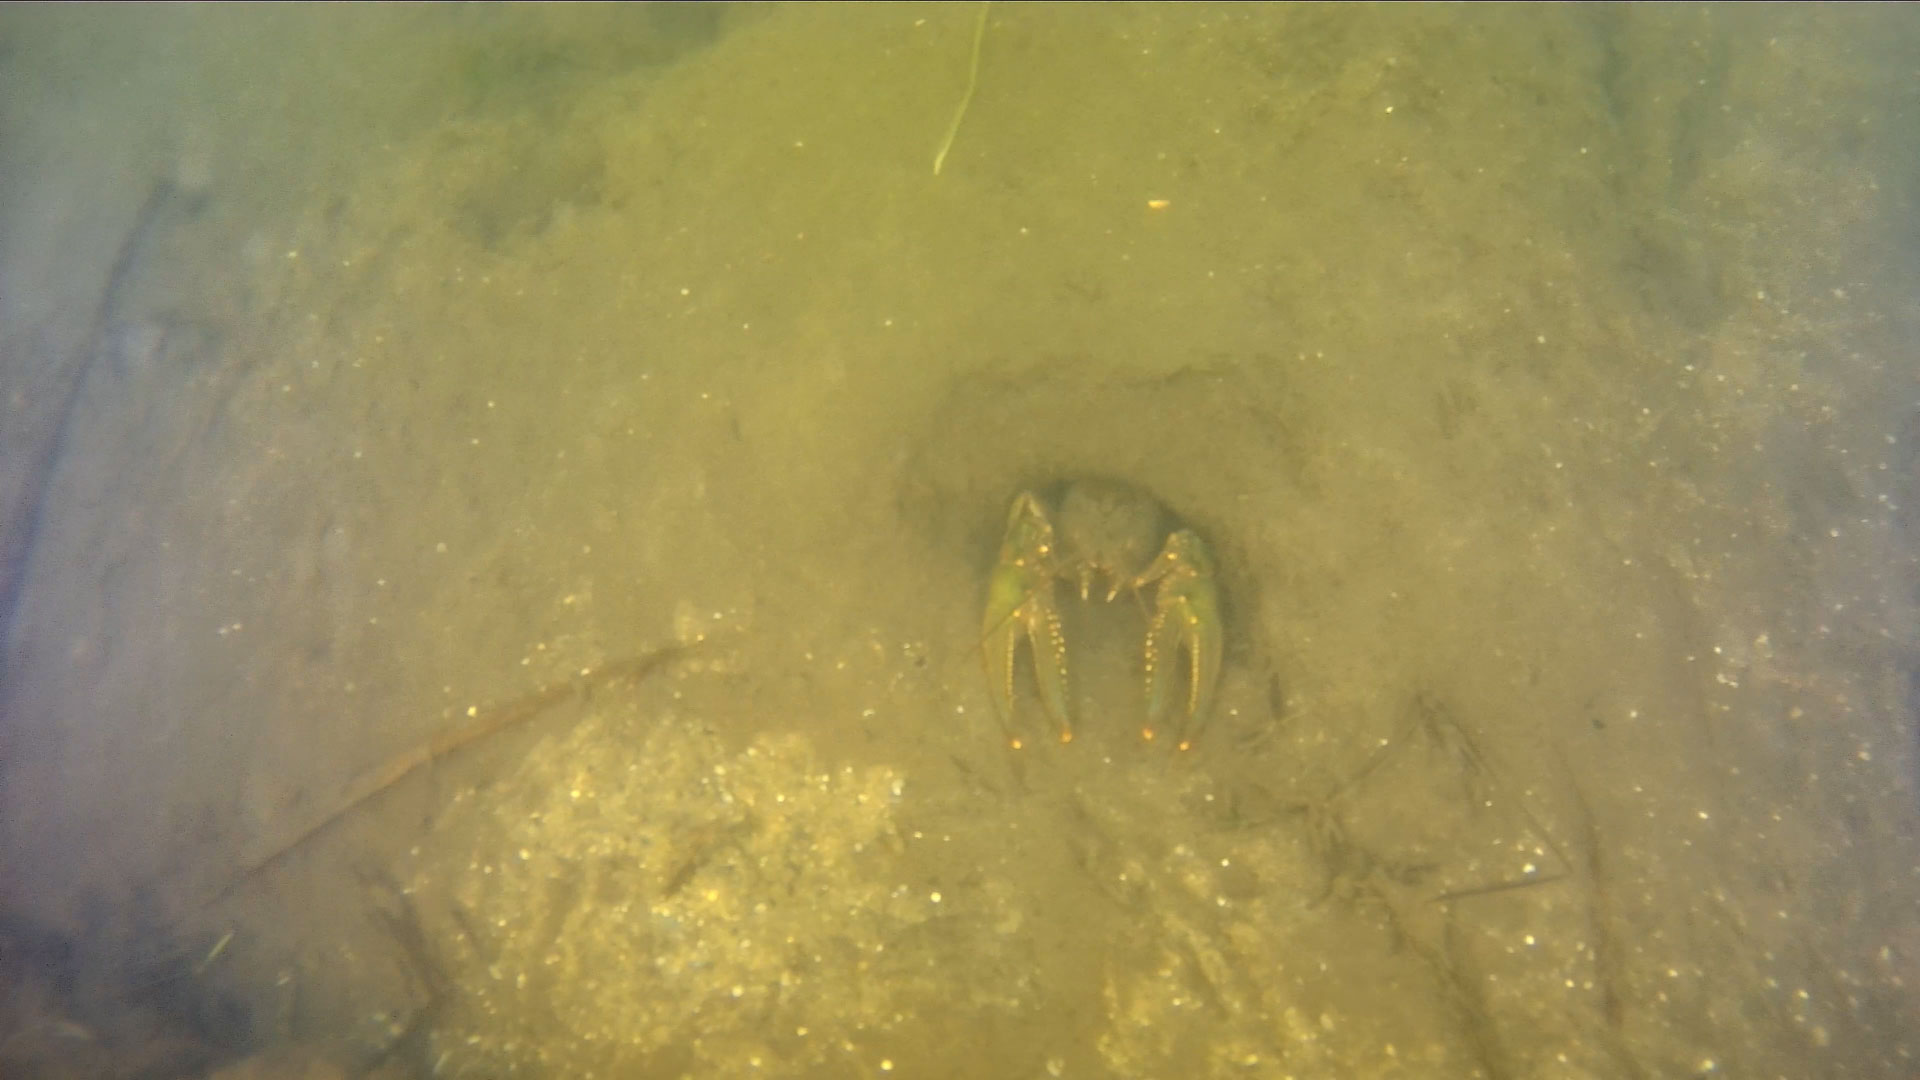 crayfish-underwater-video-kent-lake-michigan.jpg